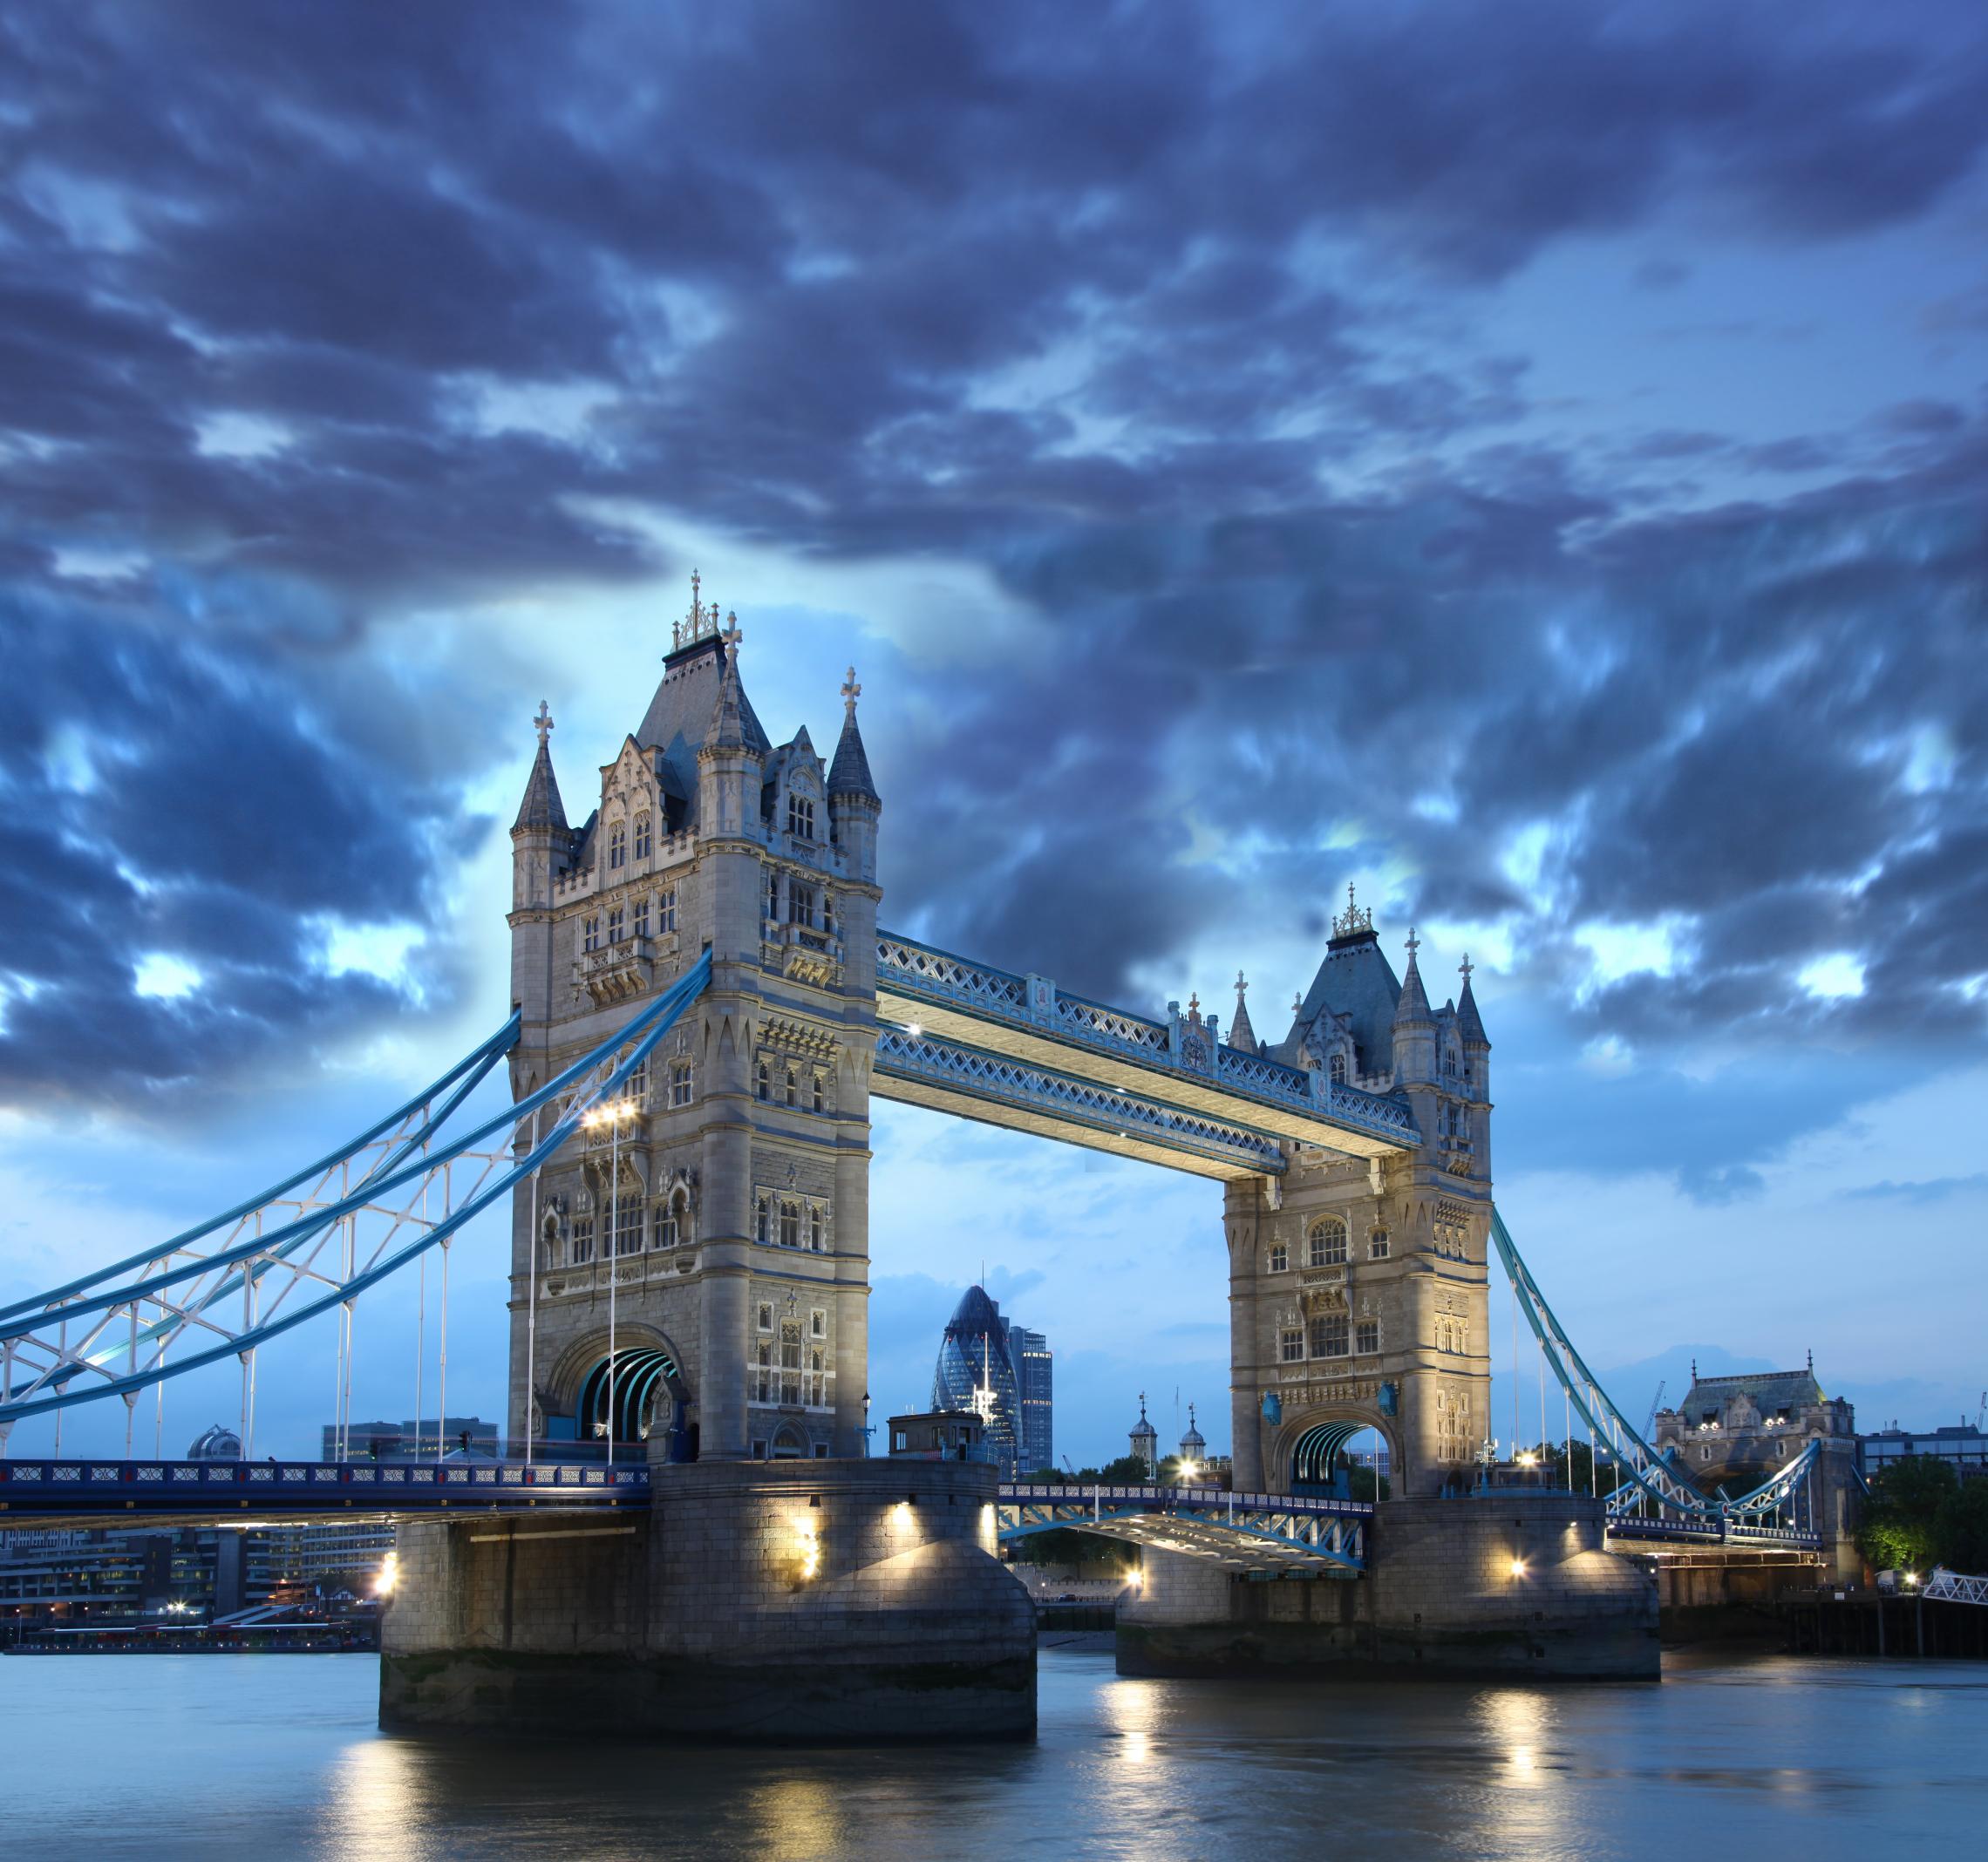 London's historic Tower Bridge